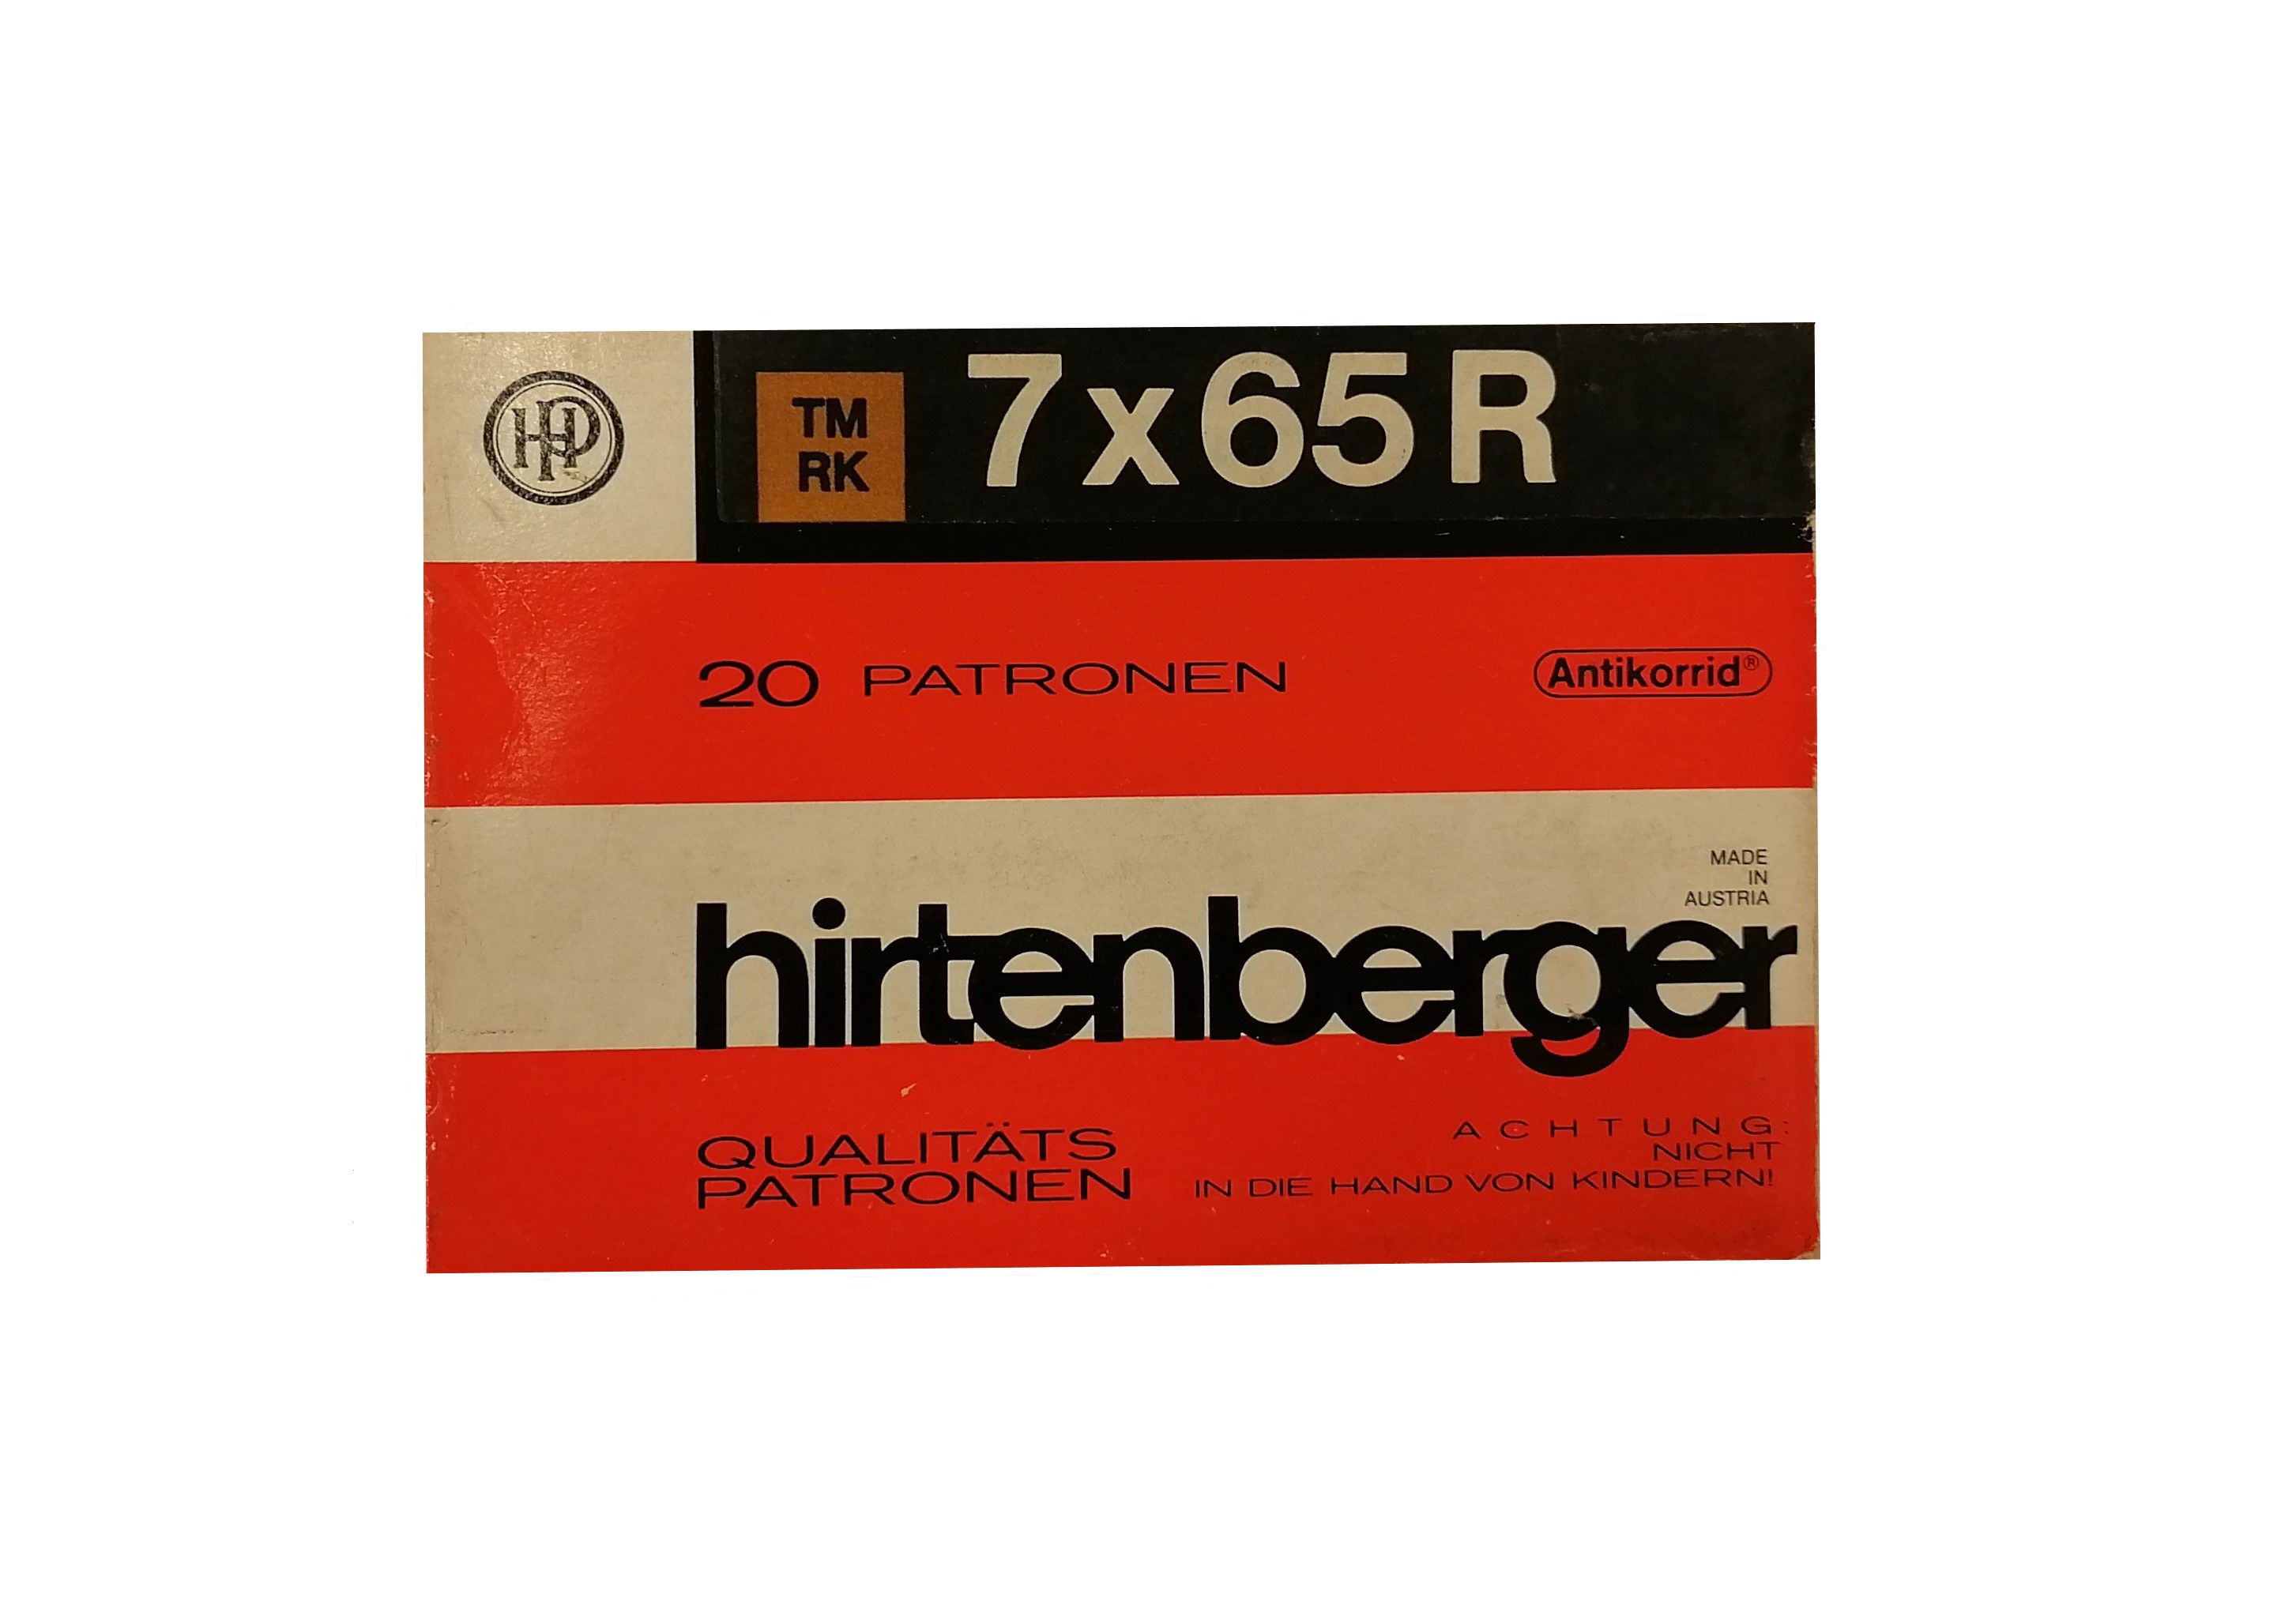 Hirtenberg 7x65 R TM